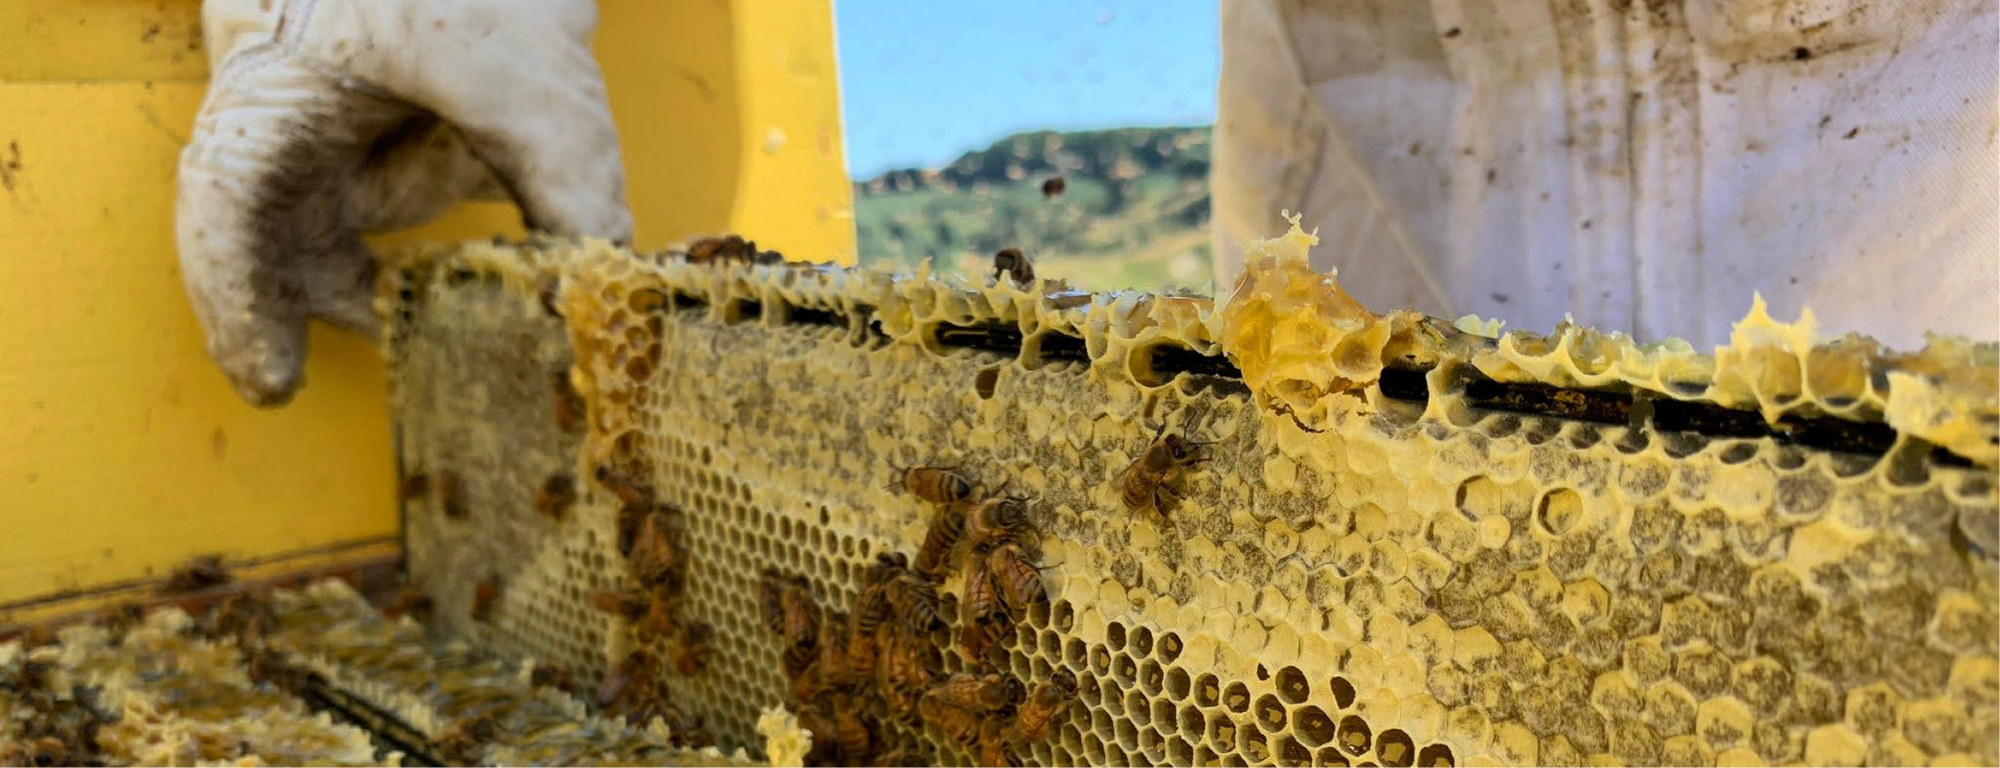 Bees Swarming on Bees & Trees Beekeeper's Head